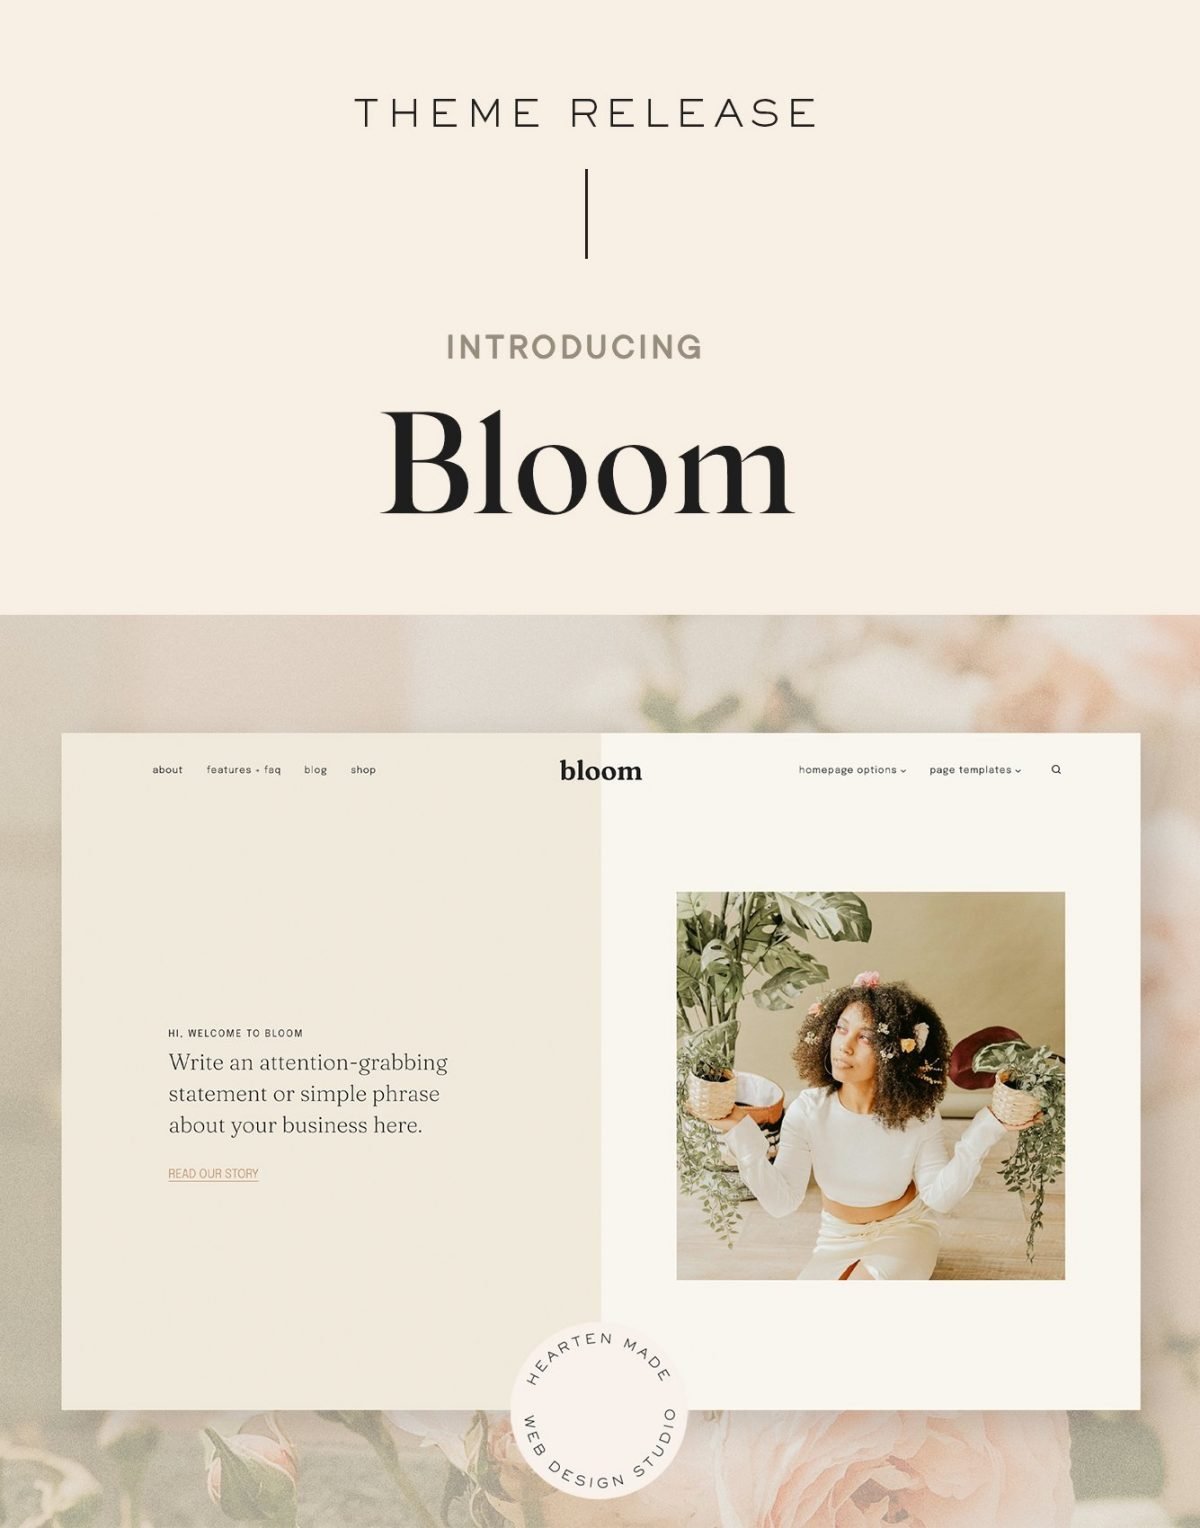 Introducing: The Bloom WordPress Theme